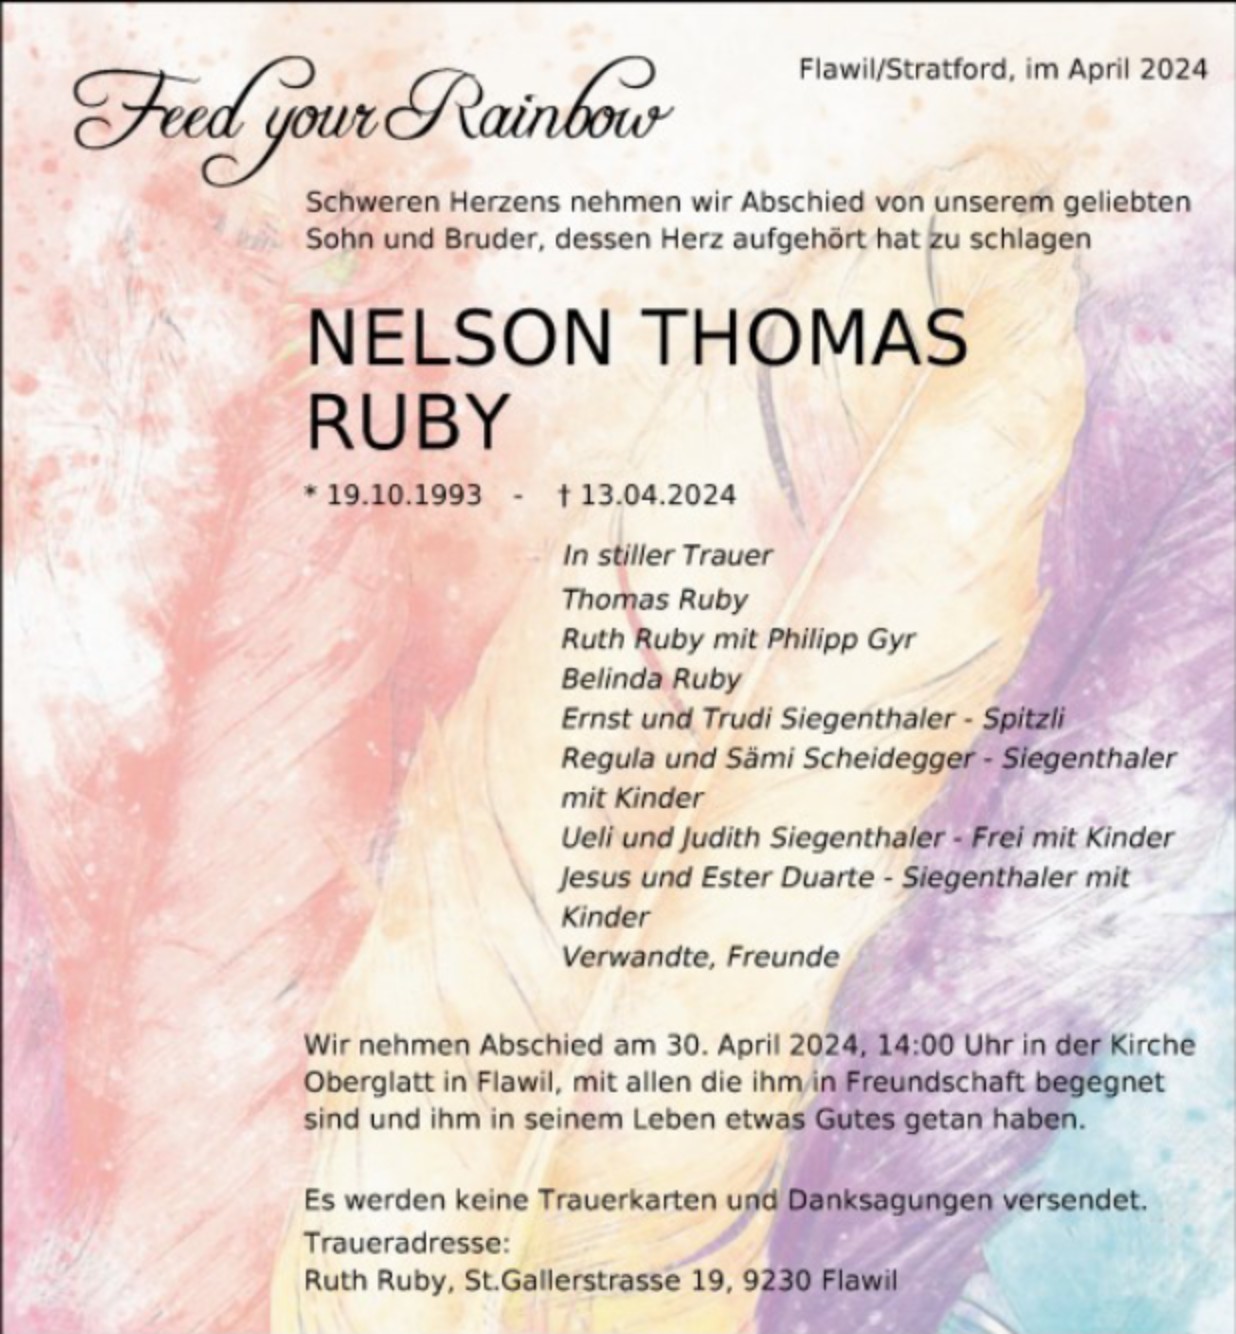 Nelson Thomas Ruby